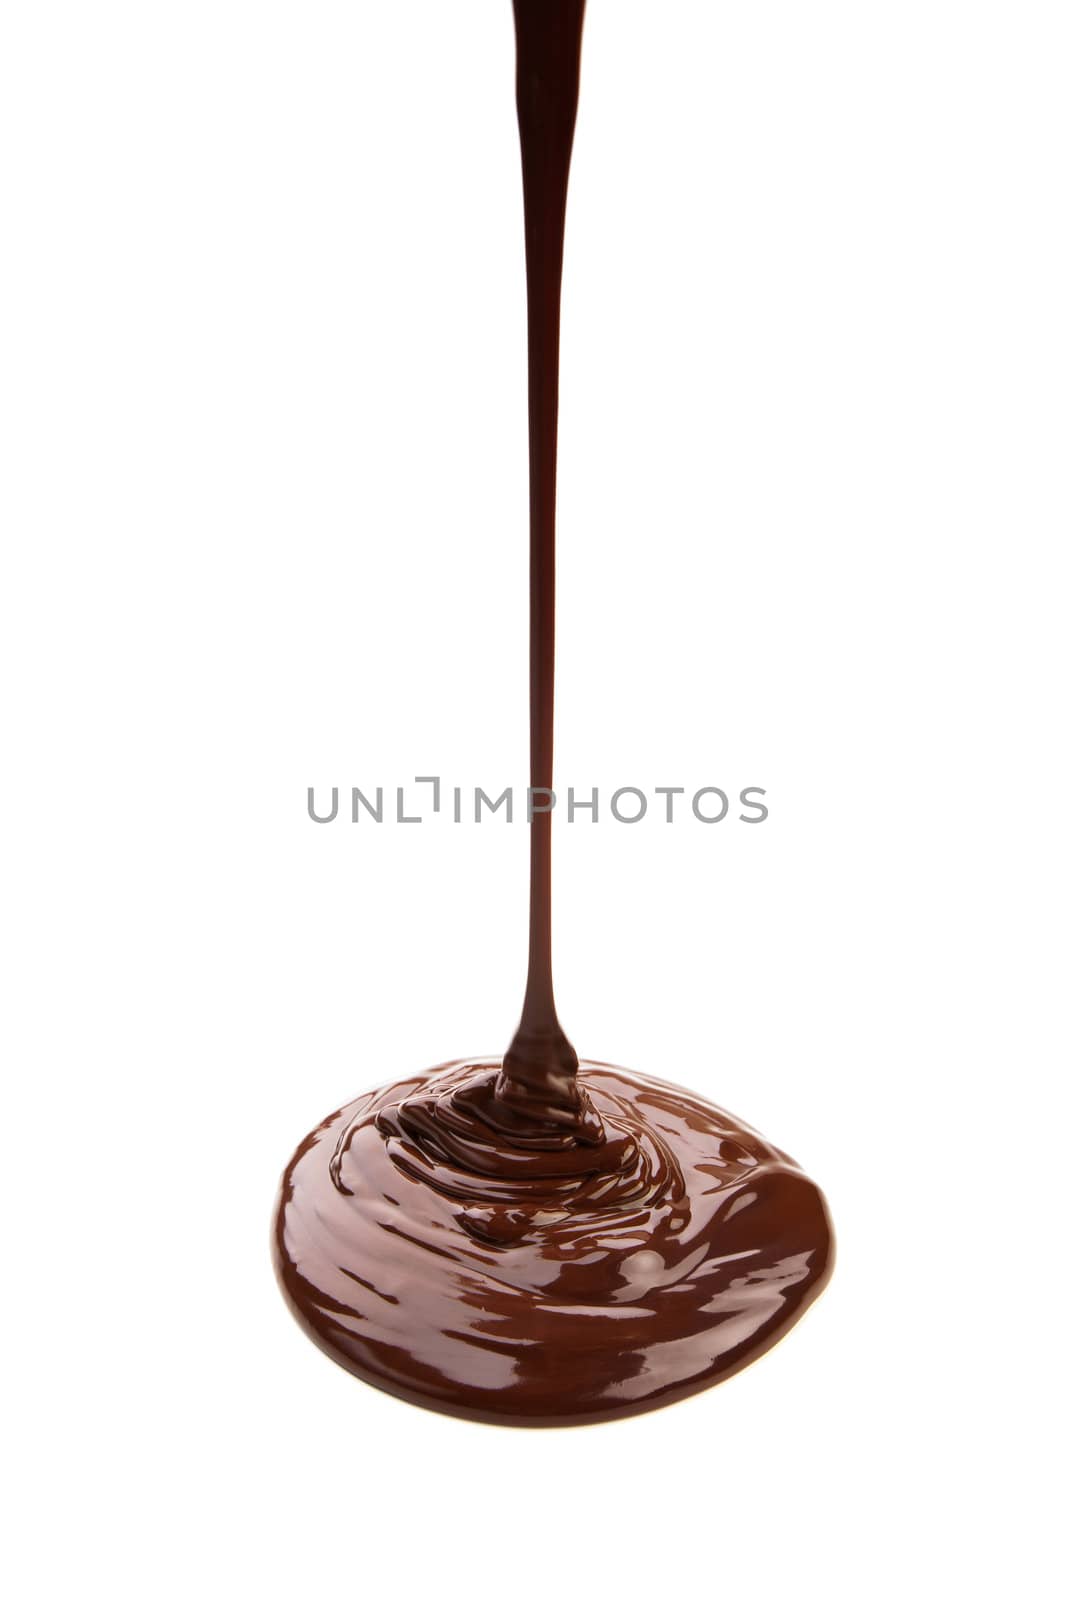 Melted chocolate by igor_stramyk